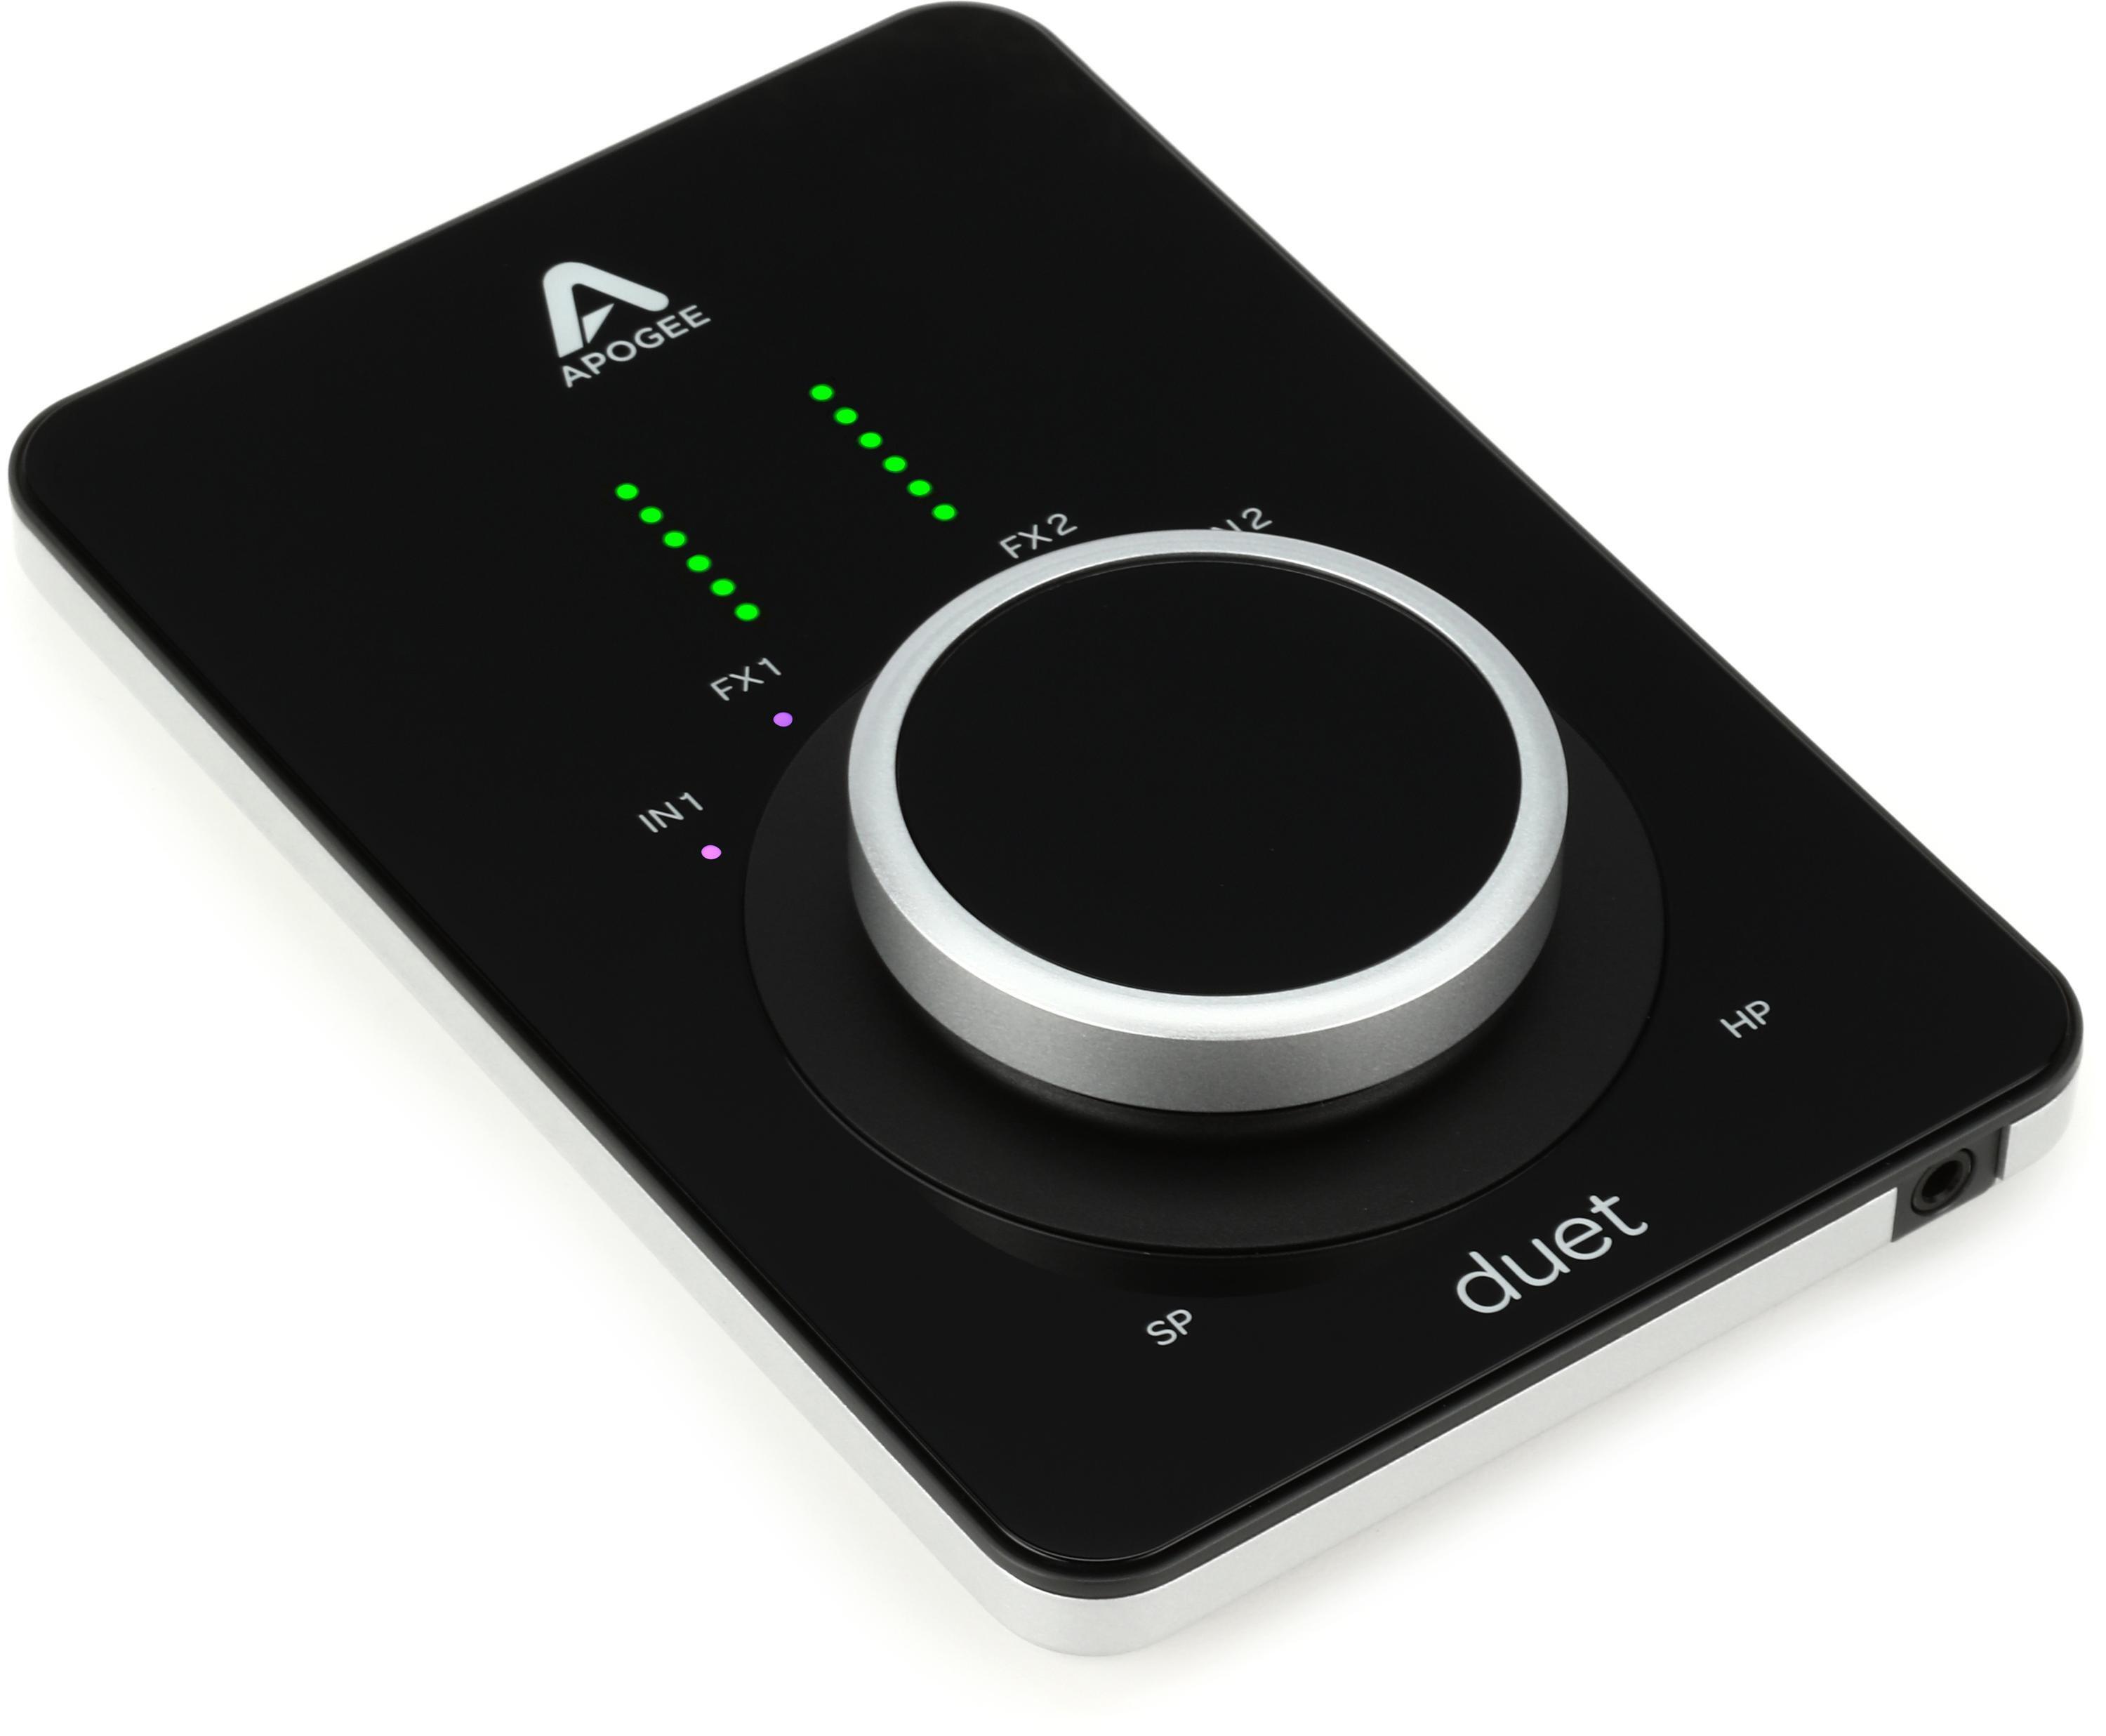 Apogee Duet 3 2x4 USB-C Audio Interface | Sweetwater